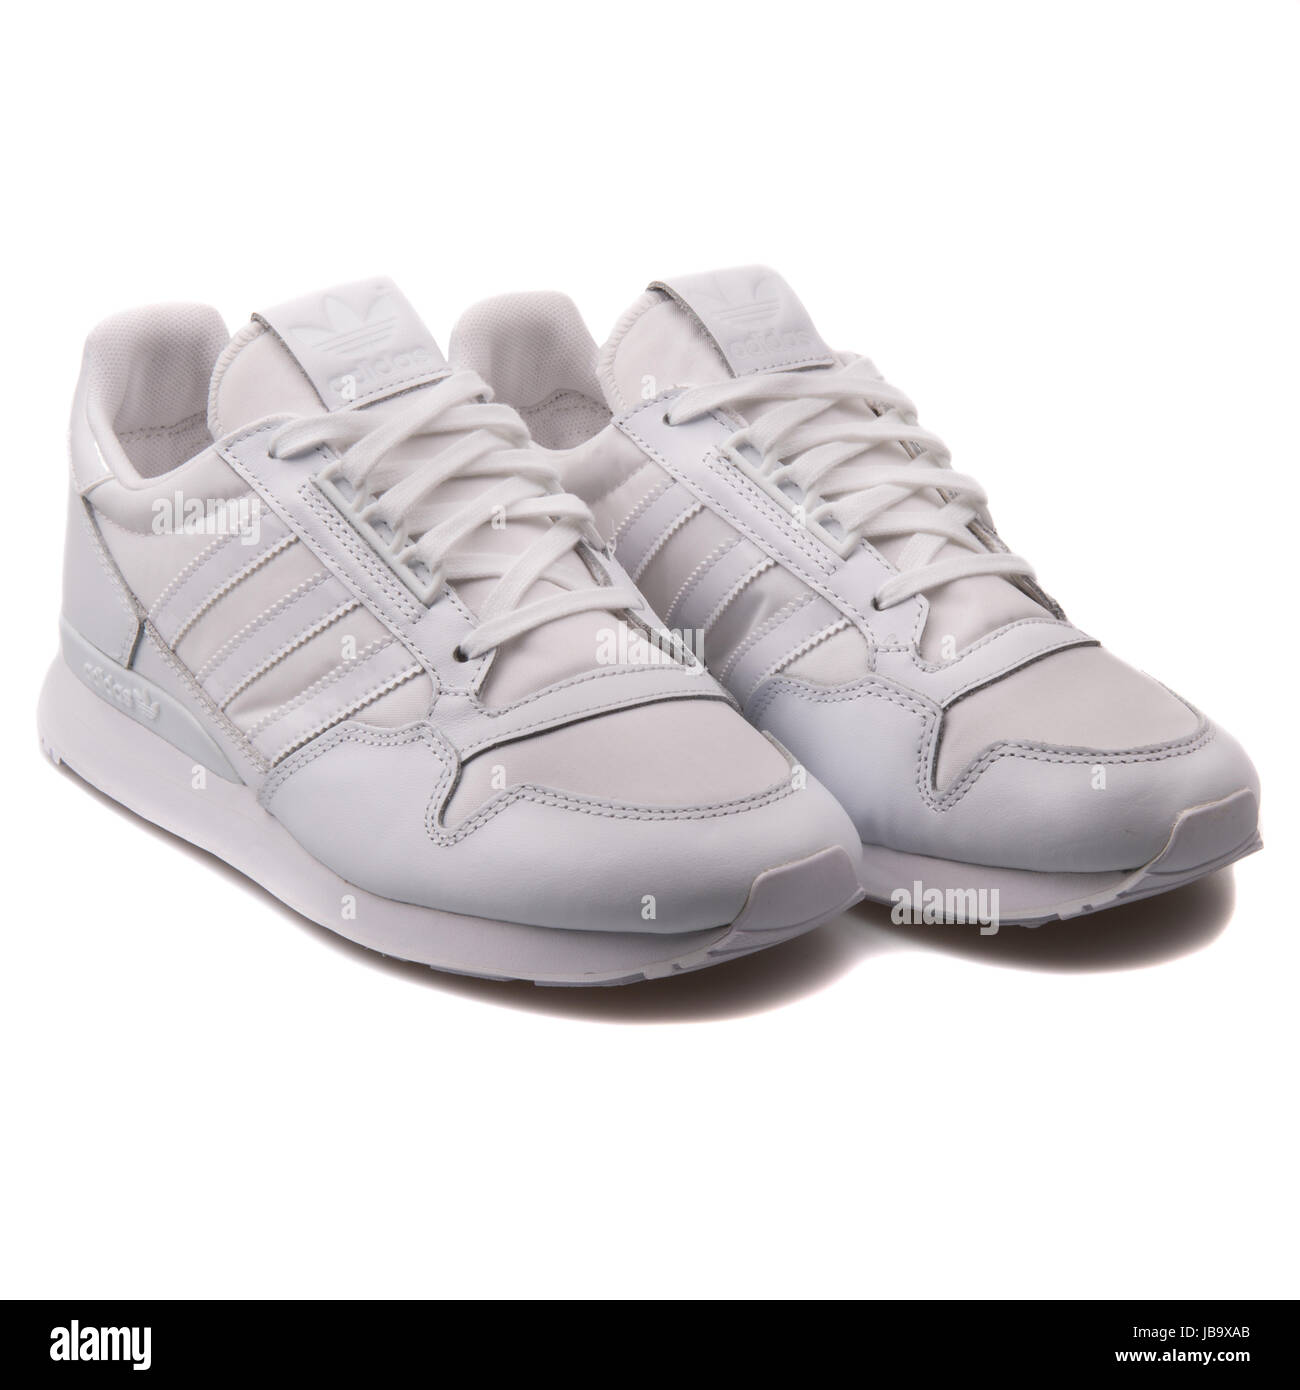 Adidas ZX OG W Blanco mujer zapatos deportivos - B25600 Fotografía de stock - Alamy